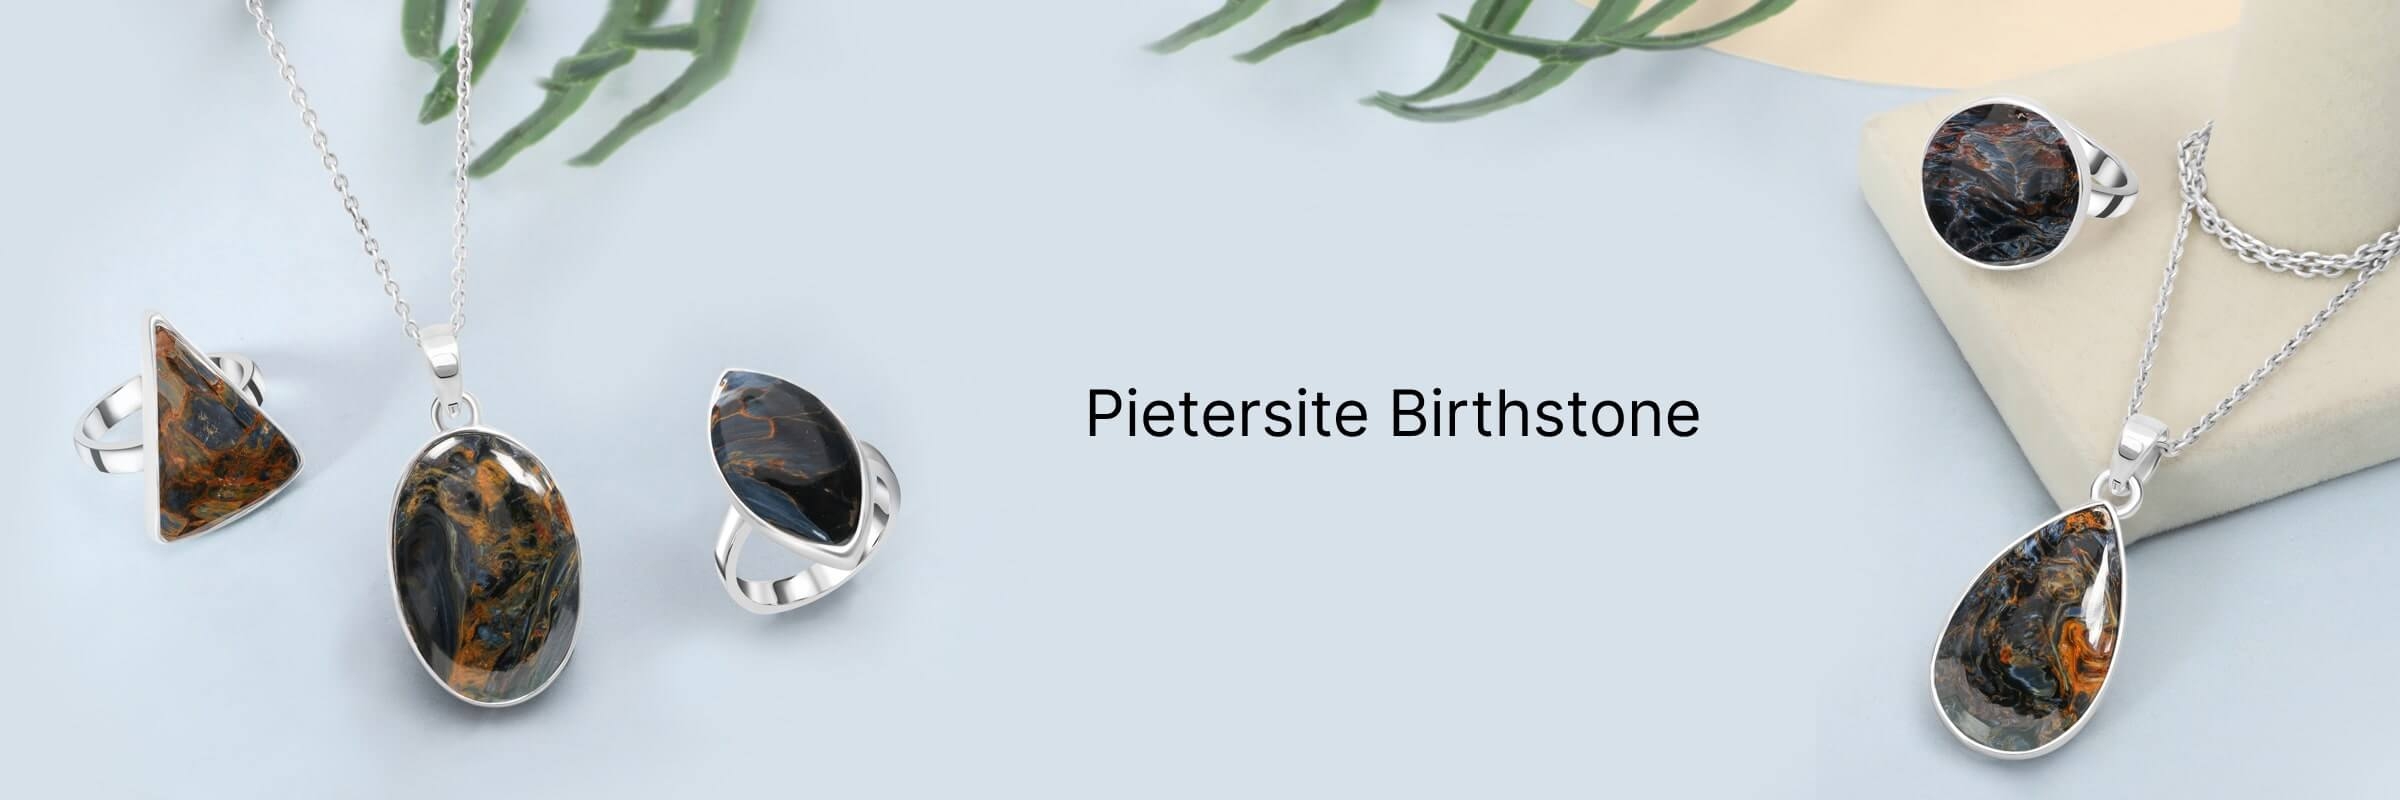 Pietersite as a birthstone